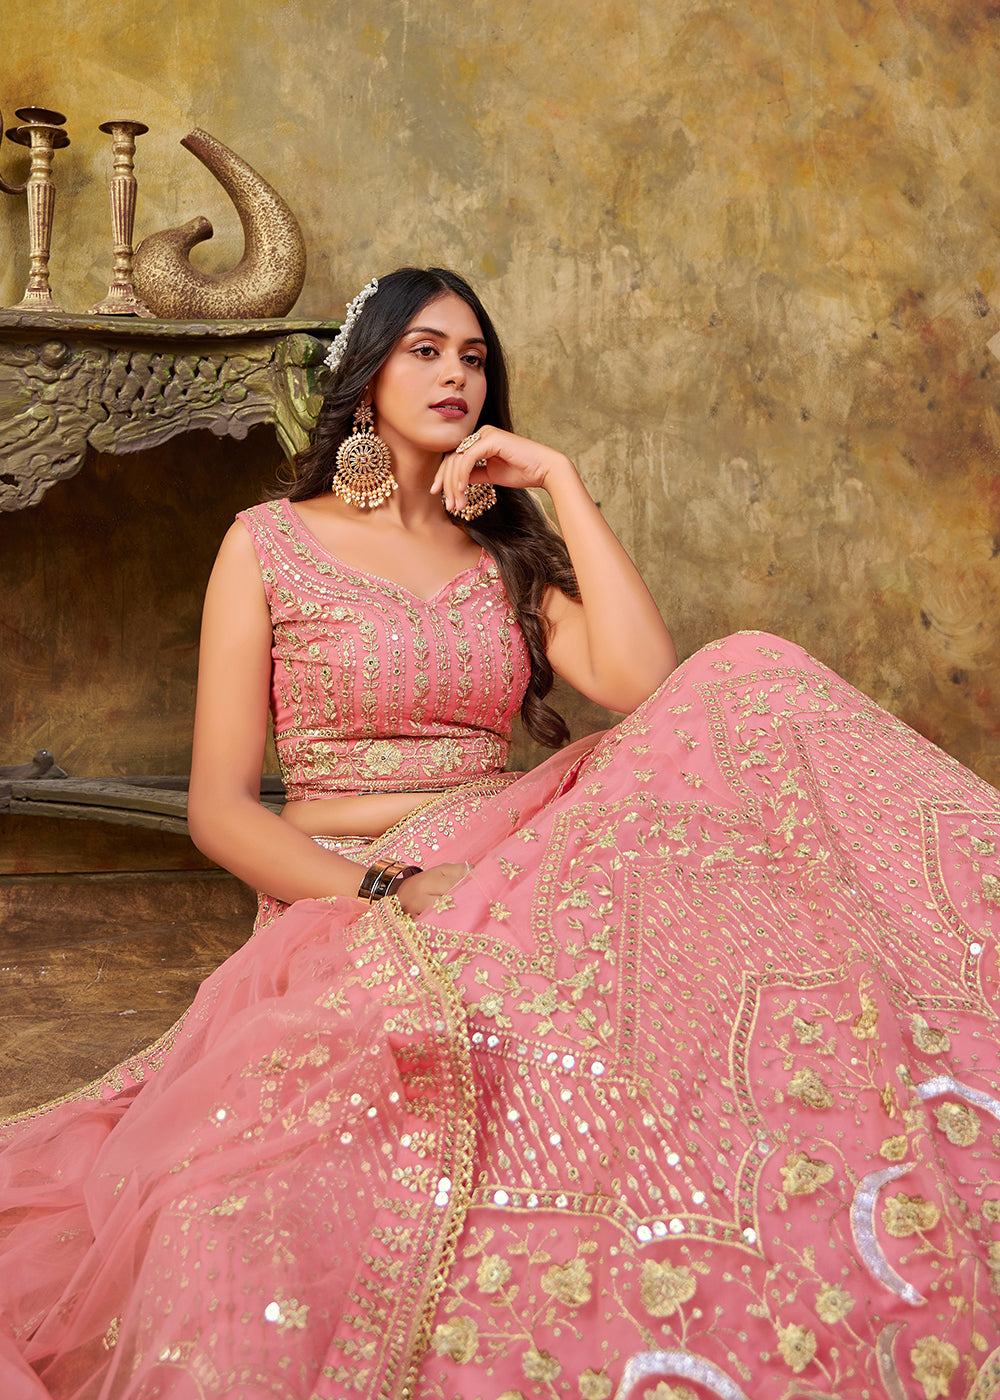 Buy Now Soft Pink Premium Net Sequins Wedding Lehenga Choli Online in USA, UK, Canada & Worldwide at Empress Clothing. 